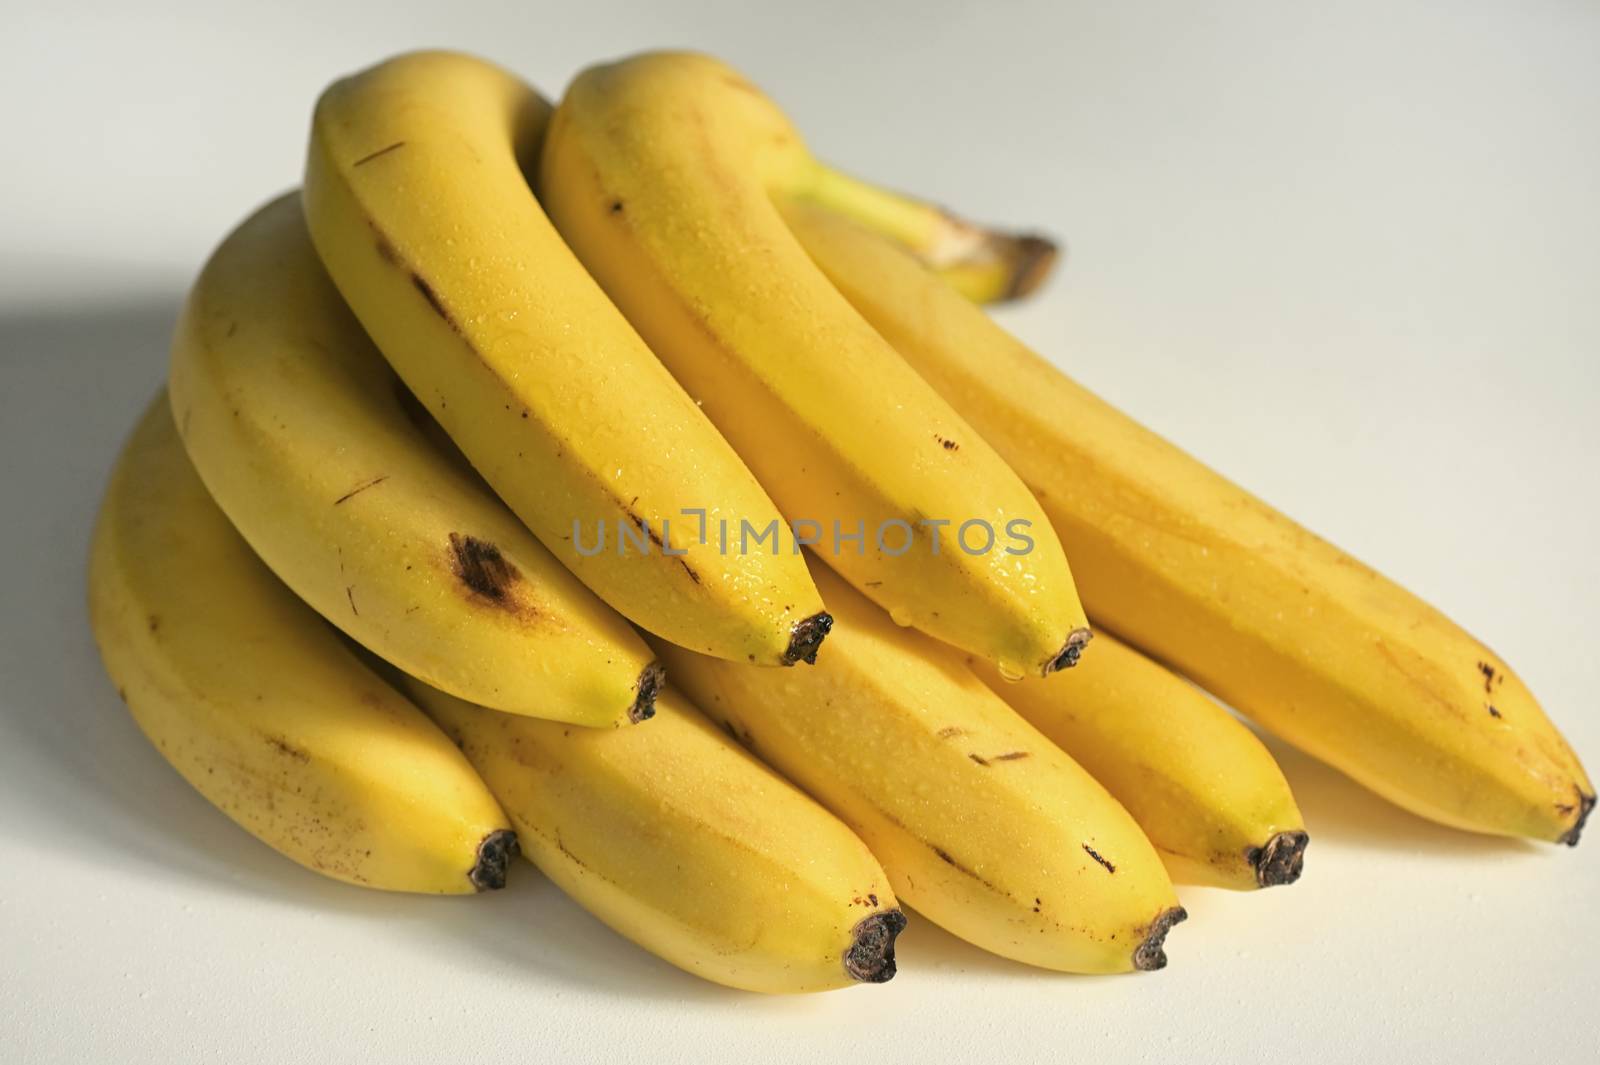 Bunch of raw ripe organic bananas by mady70